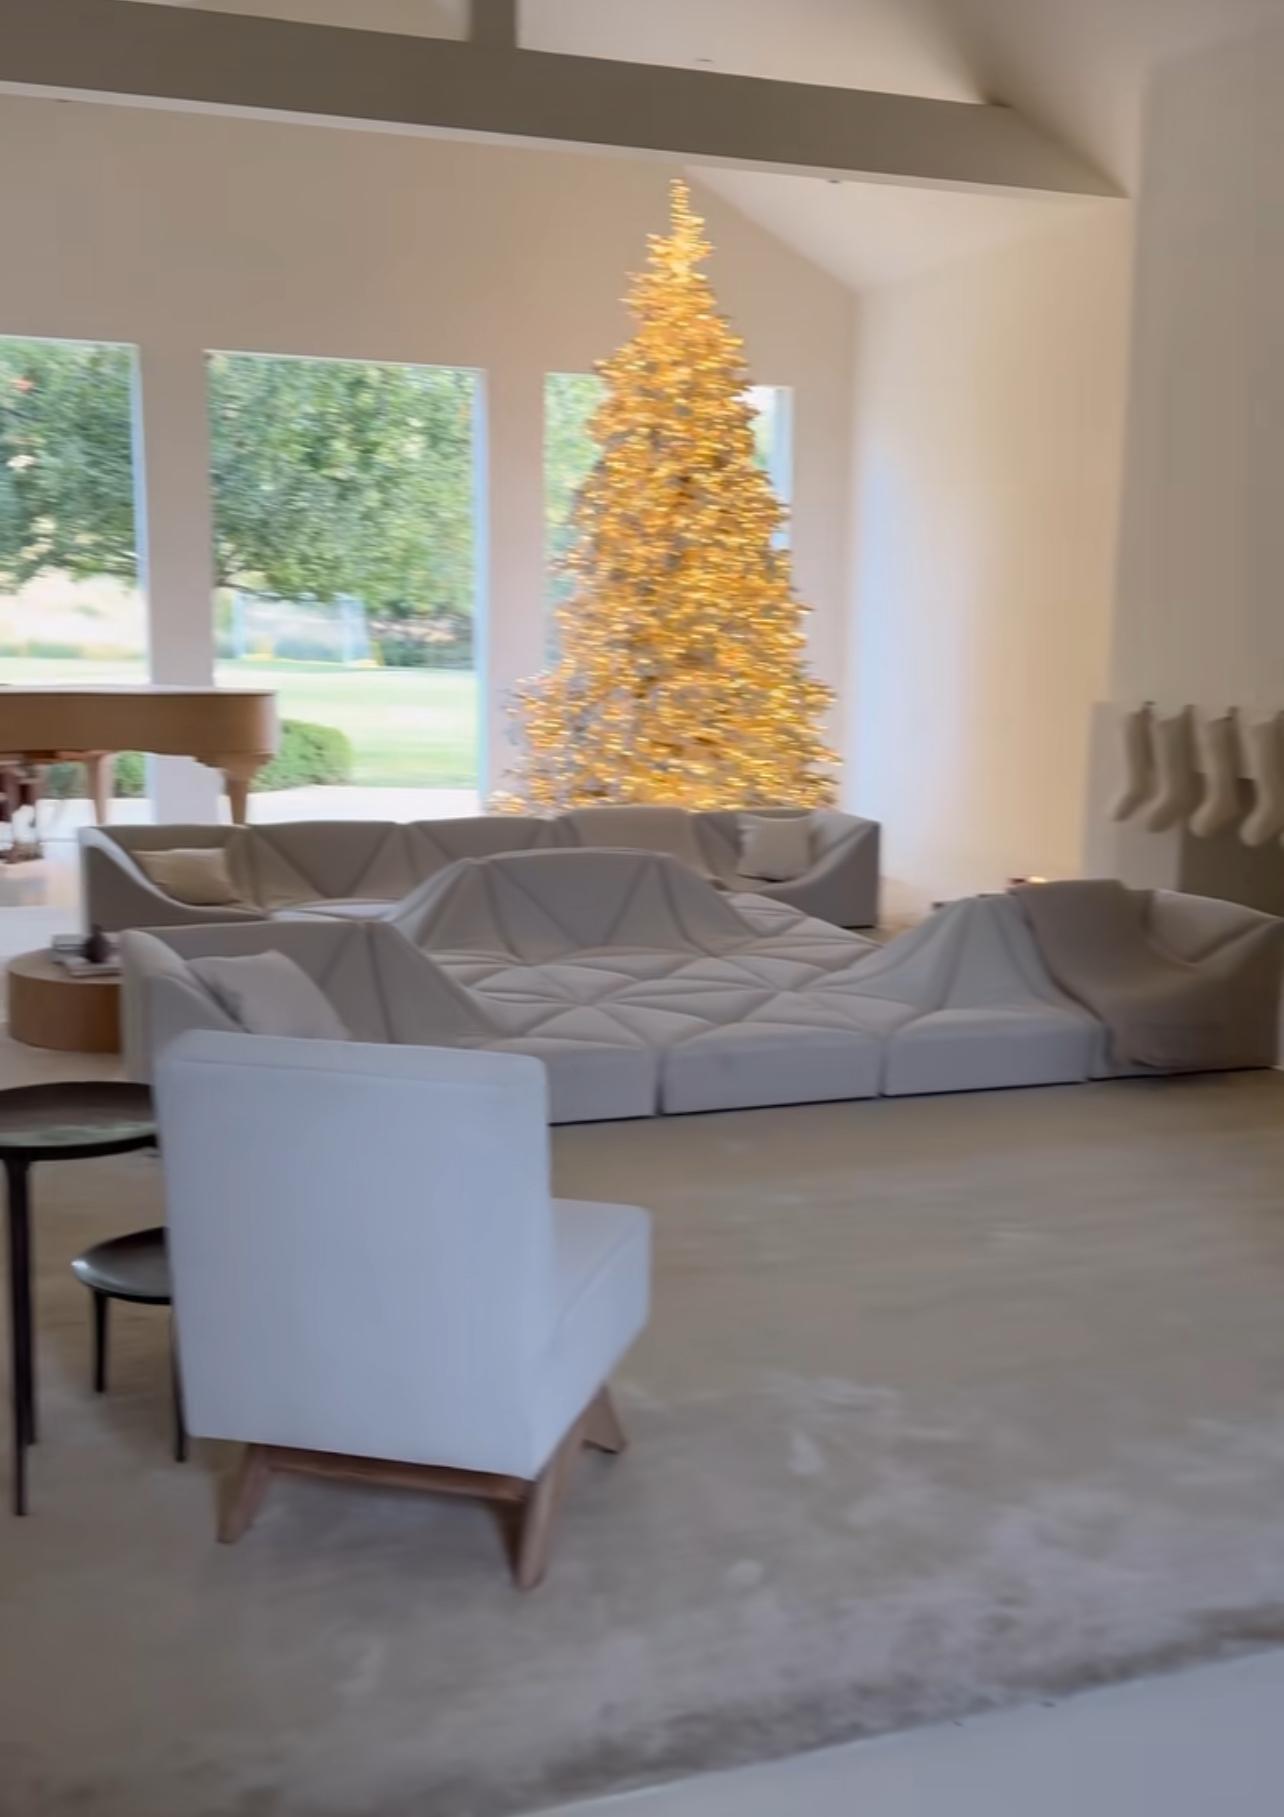 Kim Kardashian Shows Off Multiple Christmas Tree Decor & Bizzare Couch